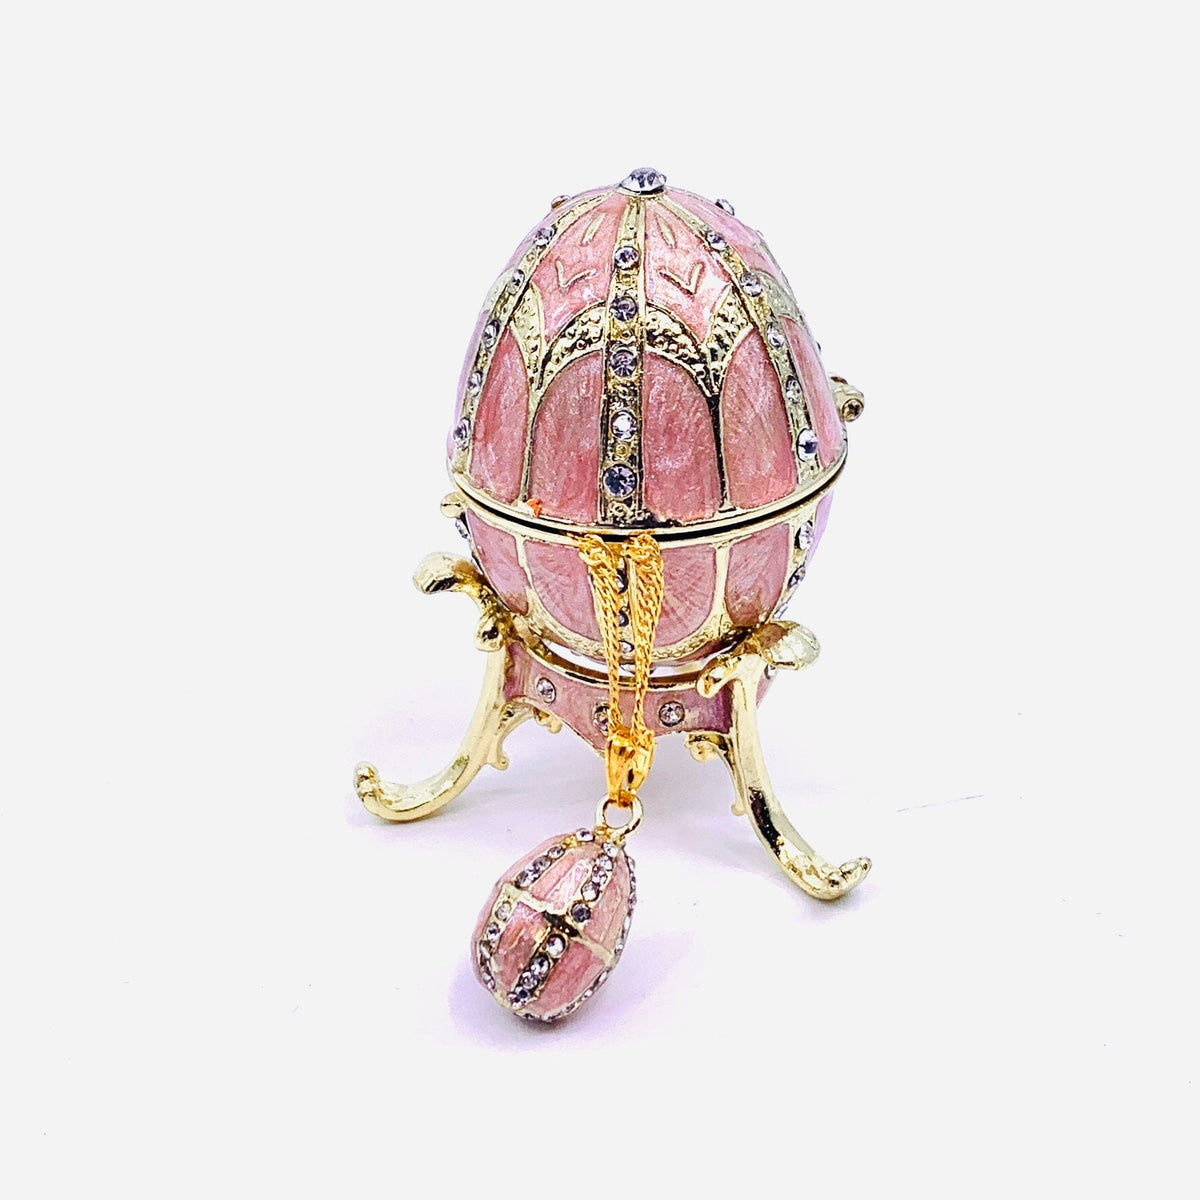 Bejeweled Enamel Trinket Box and Pendant 23, Pink Faberge Style Egg